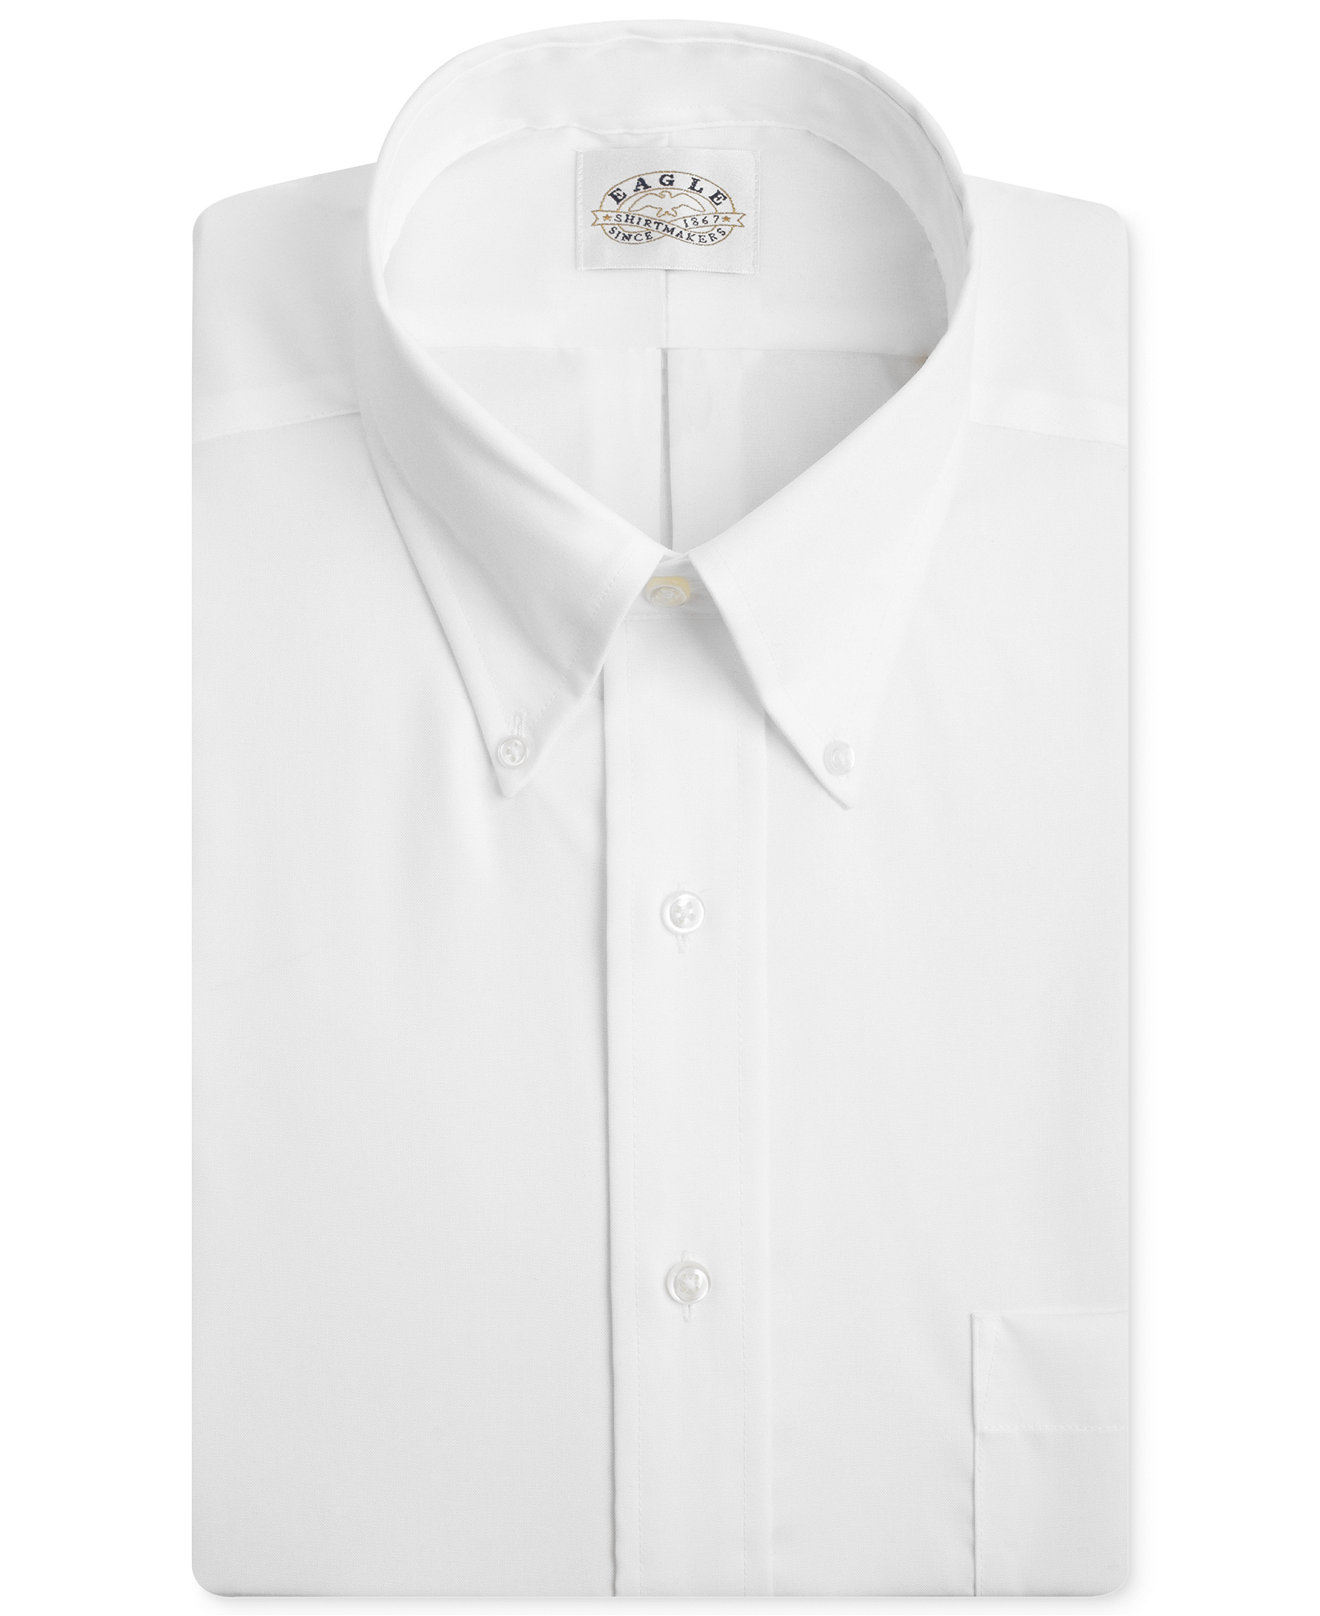 White Dress Shirts For Men